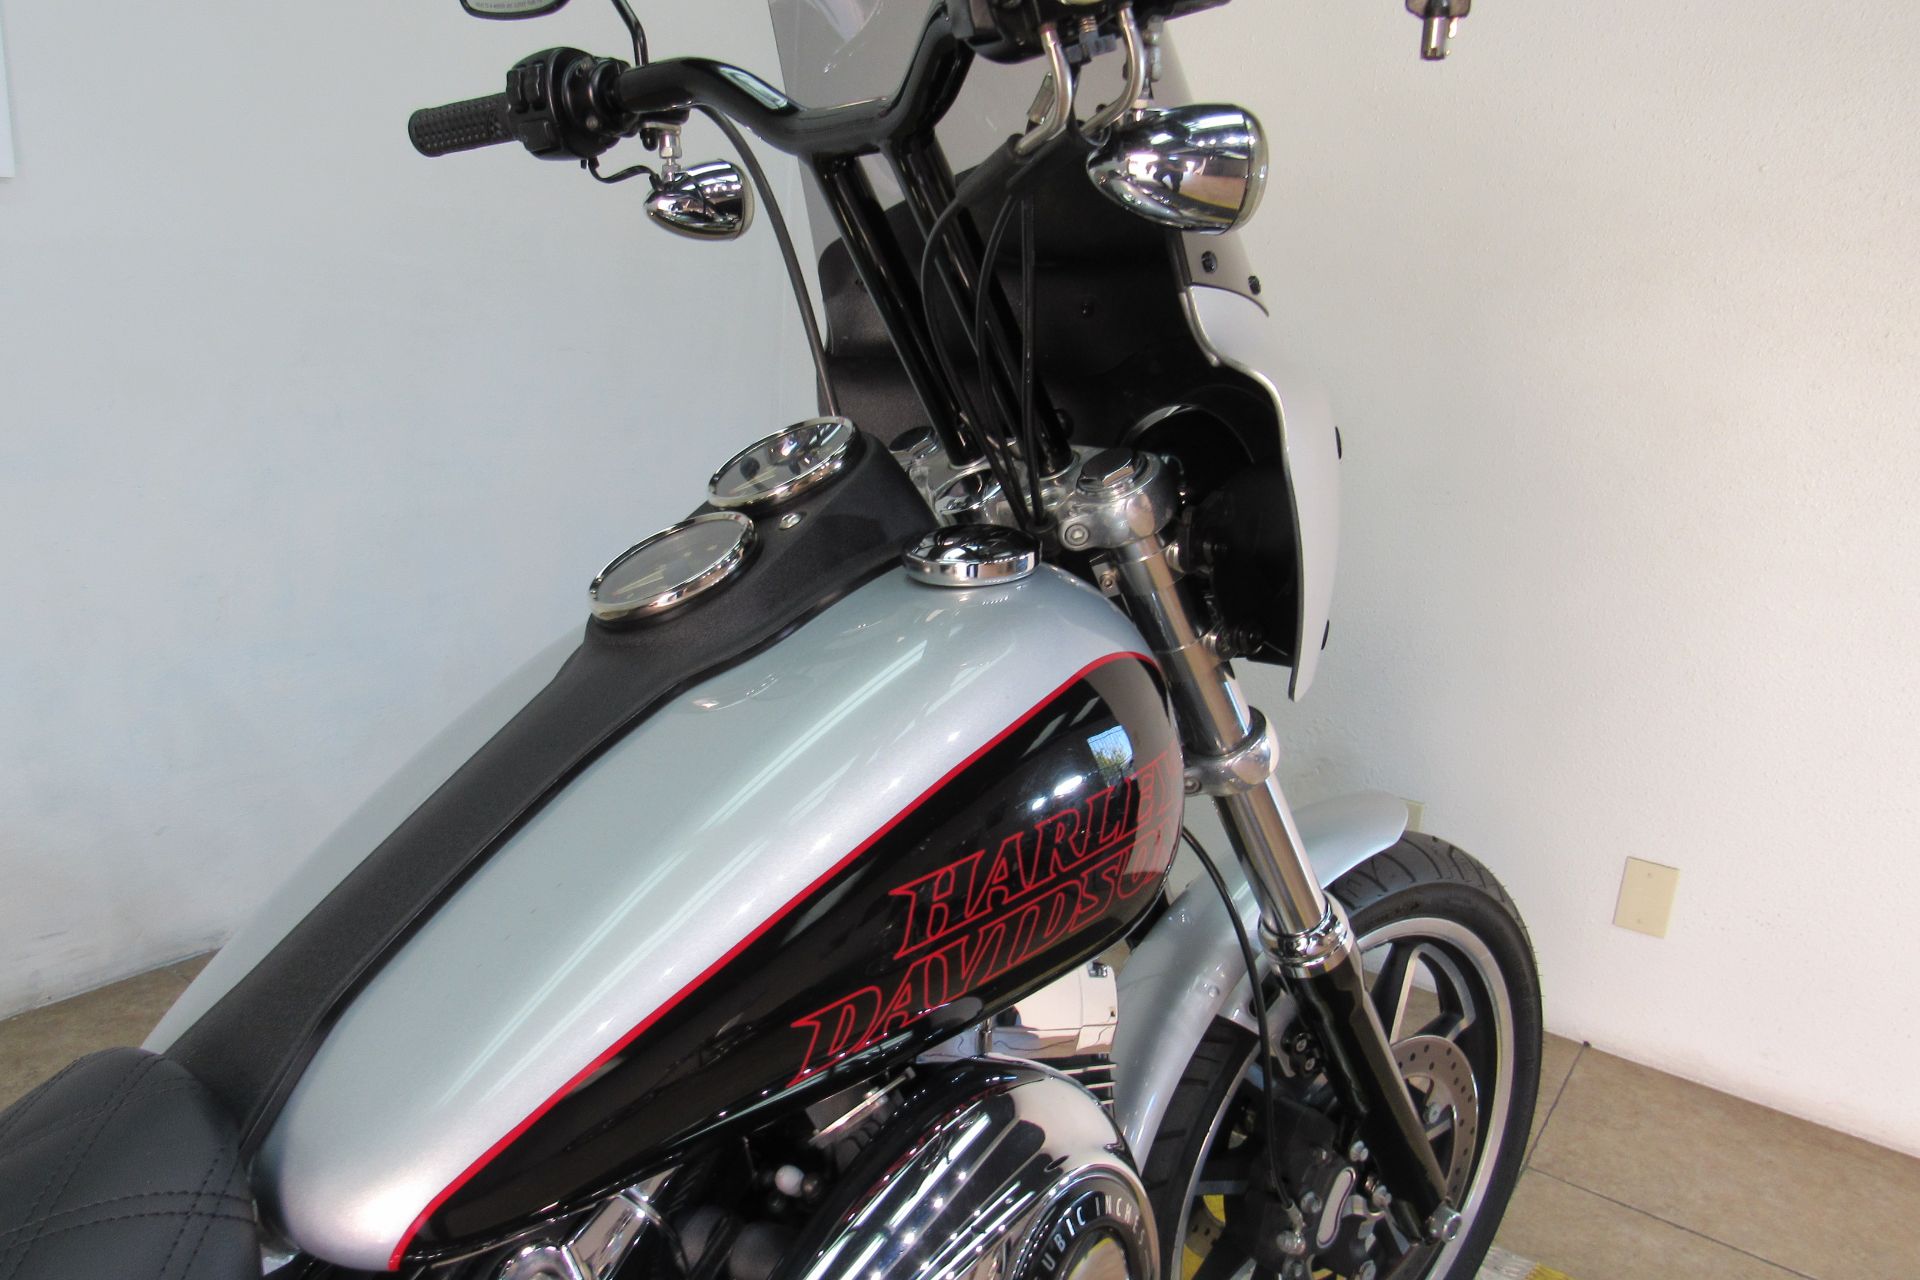 2015 Harley-Davidson Low Rider® in Temecula, California - Photo 23